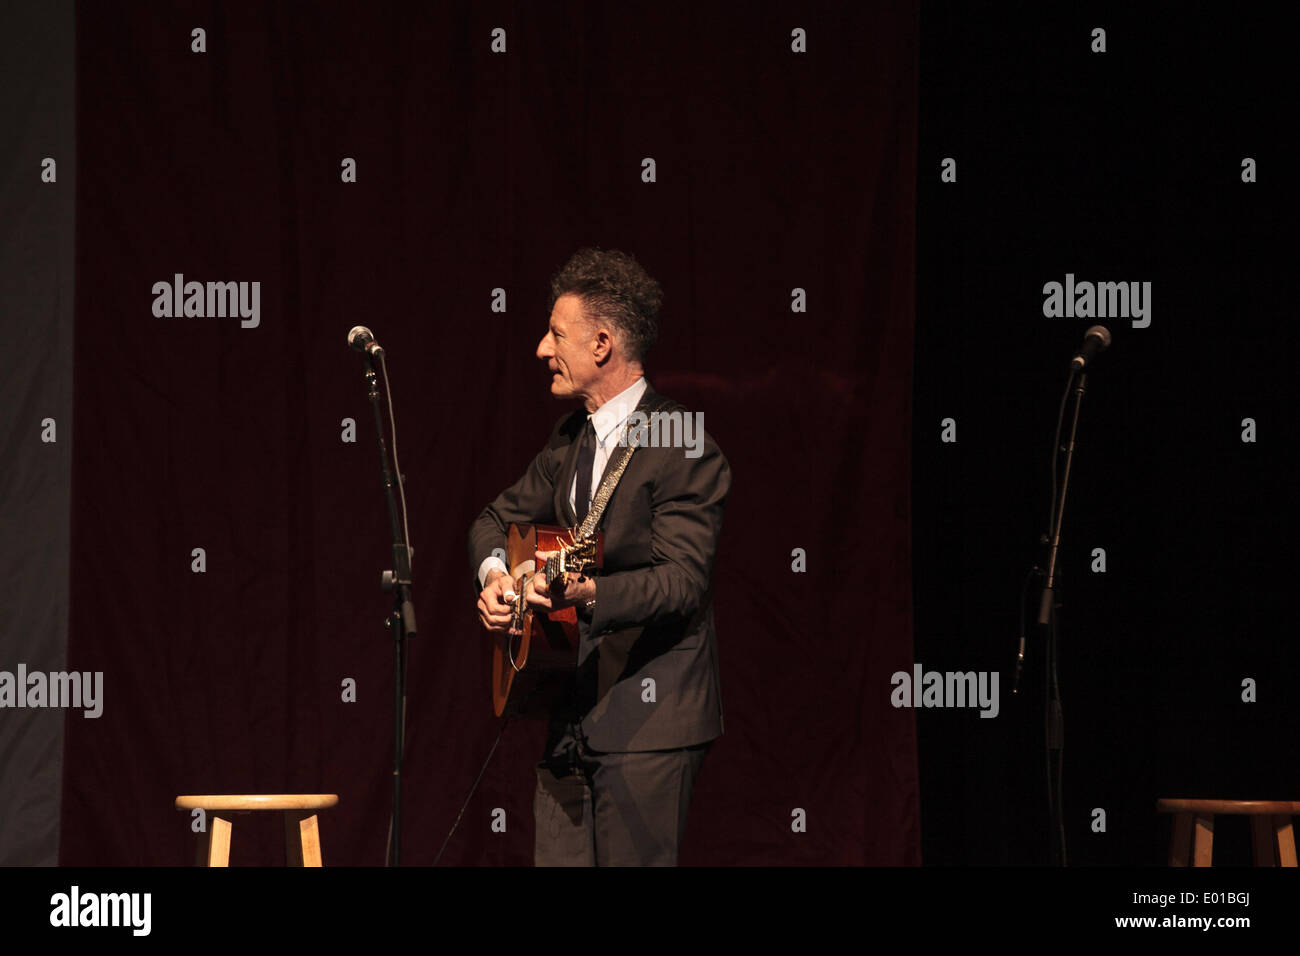 Austin, TX, USA. 25th Apr, 2014. Singer Lyle Lovett performs at the Austin City Limits Moody Theater on April 25, 2014 for the MJ&M charity fundraiser. © Rustin Gudim/ZUMAPRESS.com/Alamy Live News Stock Photo